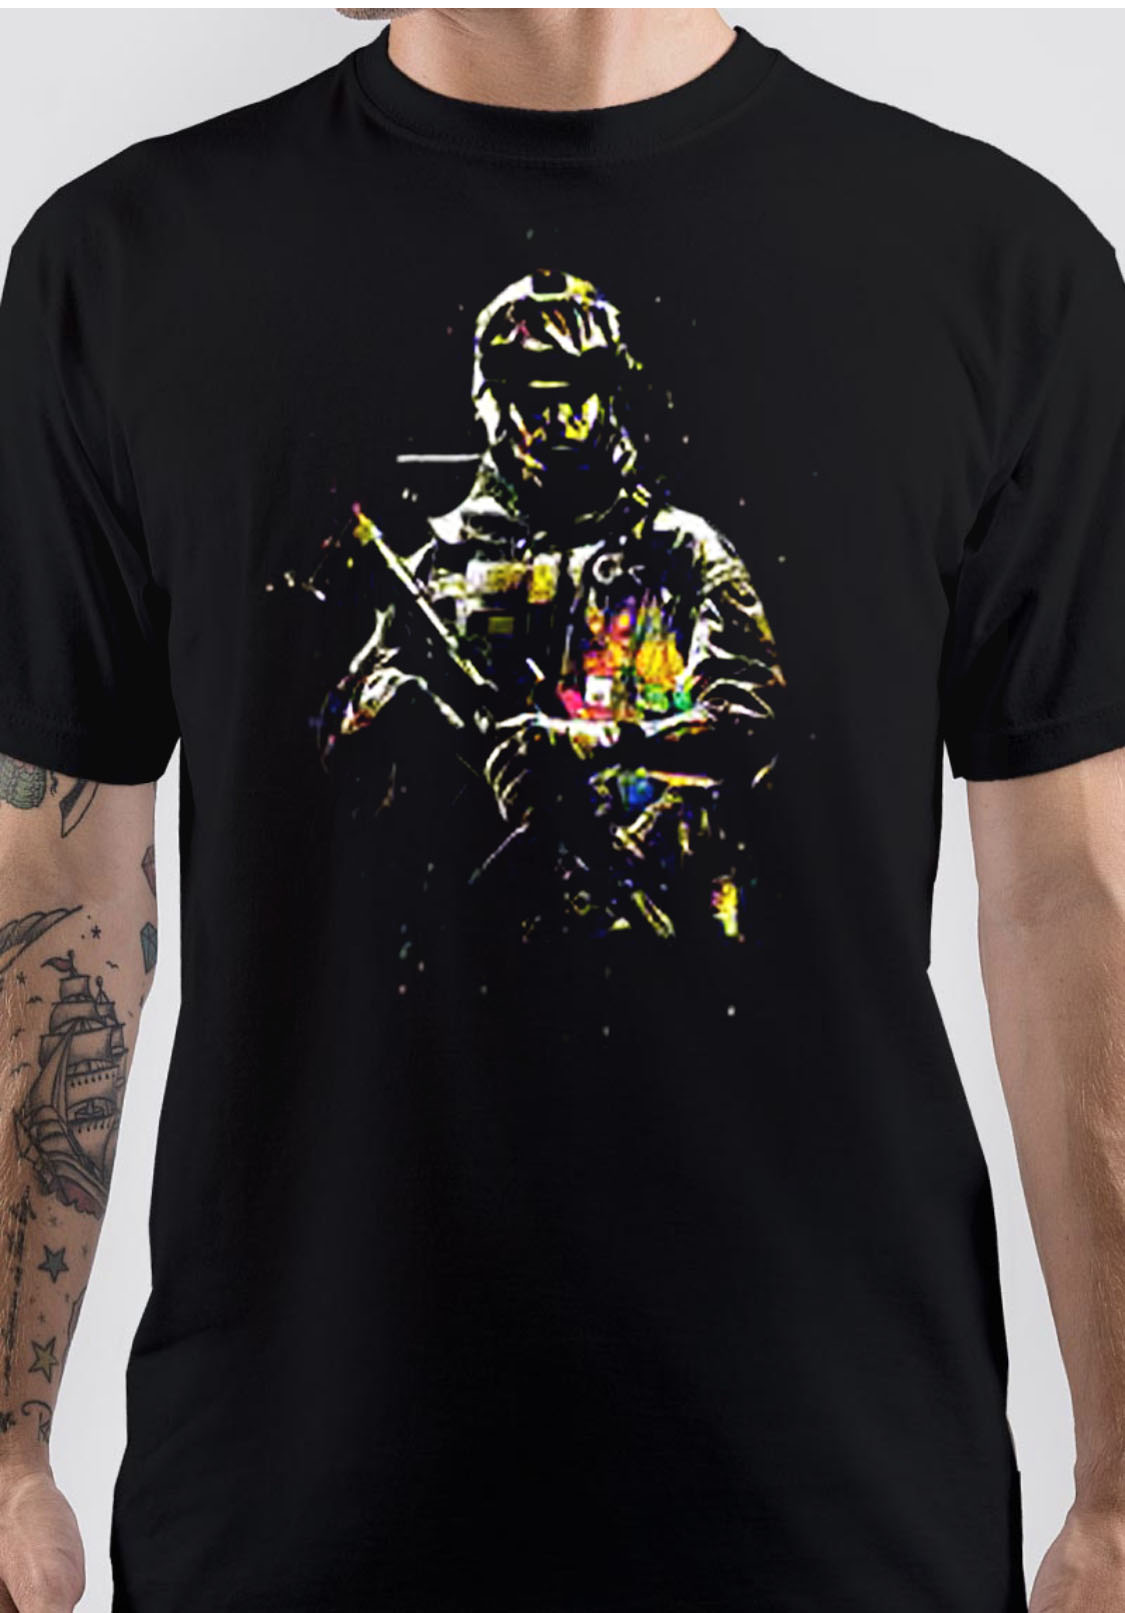 Call Of Duty Warzone T-Shirt | Swag Shirts